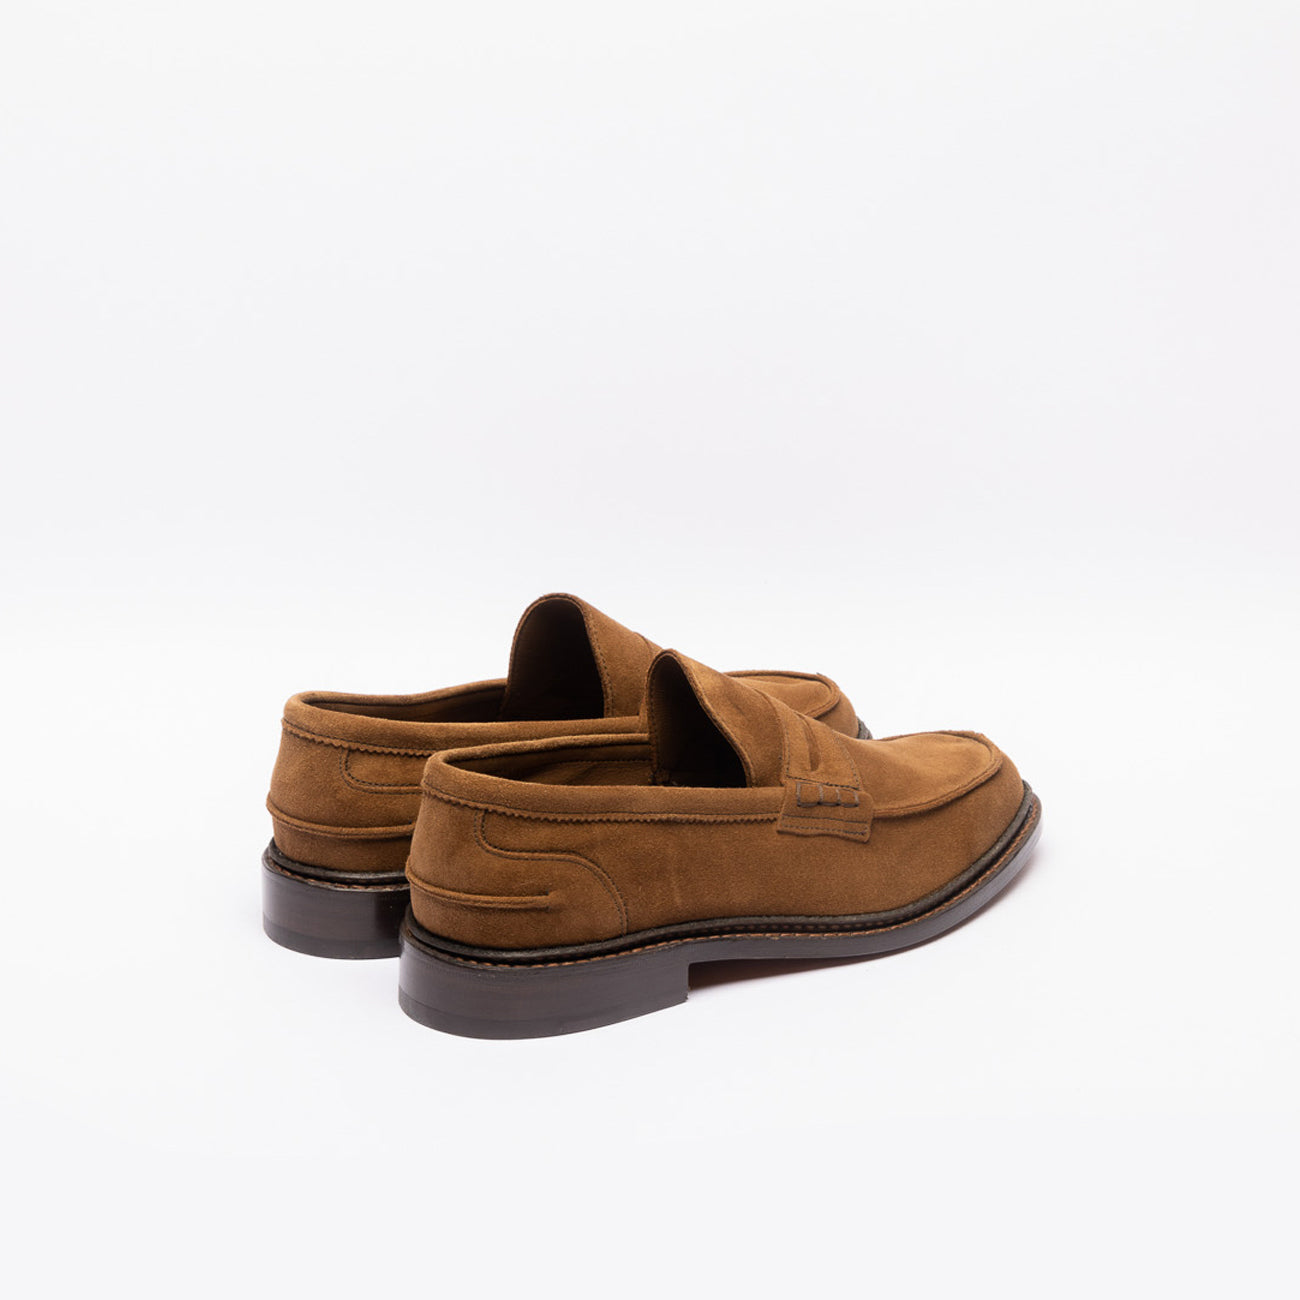 Tricker's Adam penny loafers in brown suede (Cubana suede)